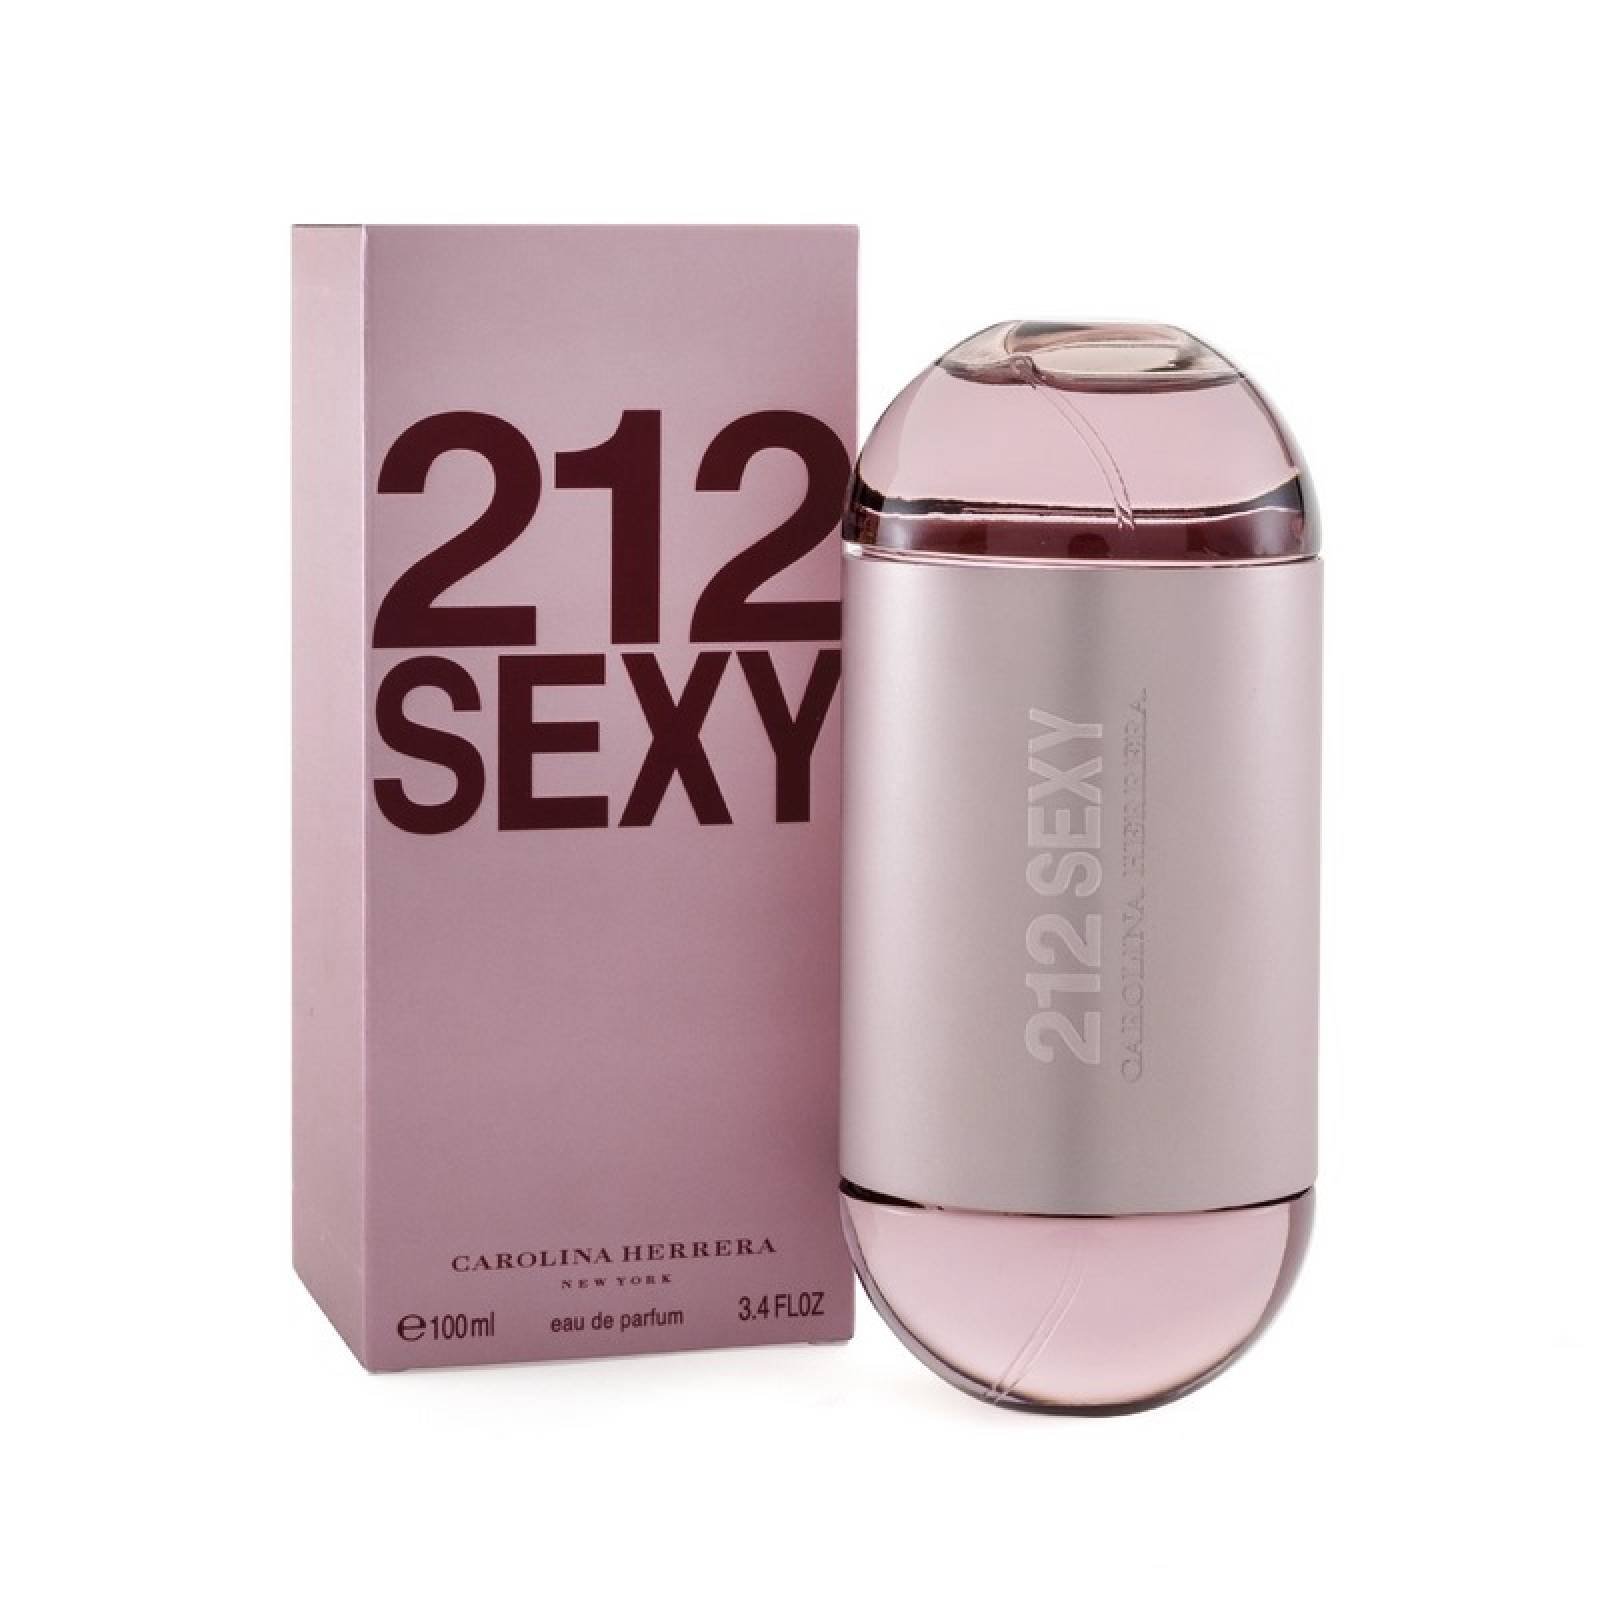 212 Sexy de Carolina Herrera Eau de Parfum 100 ml Fragancia para Dama